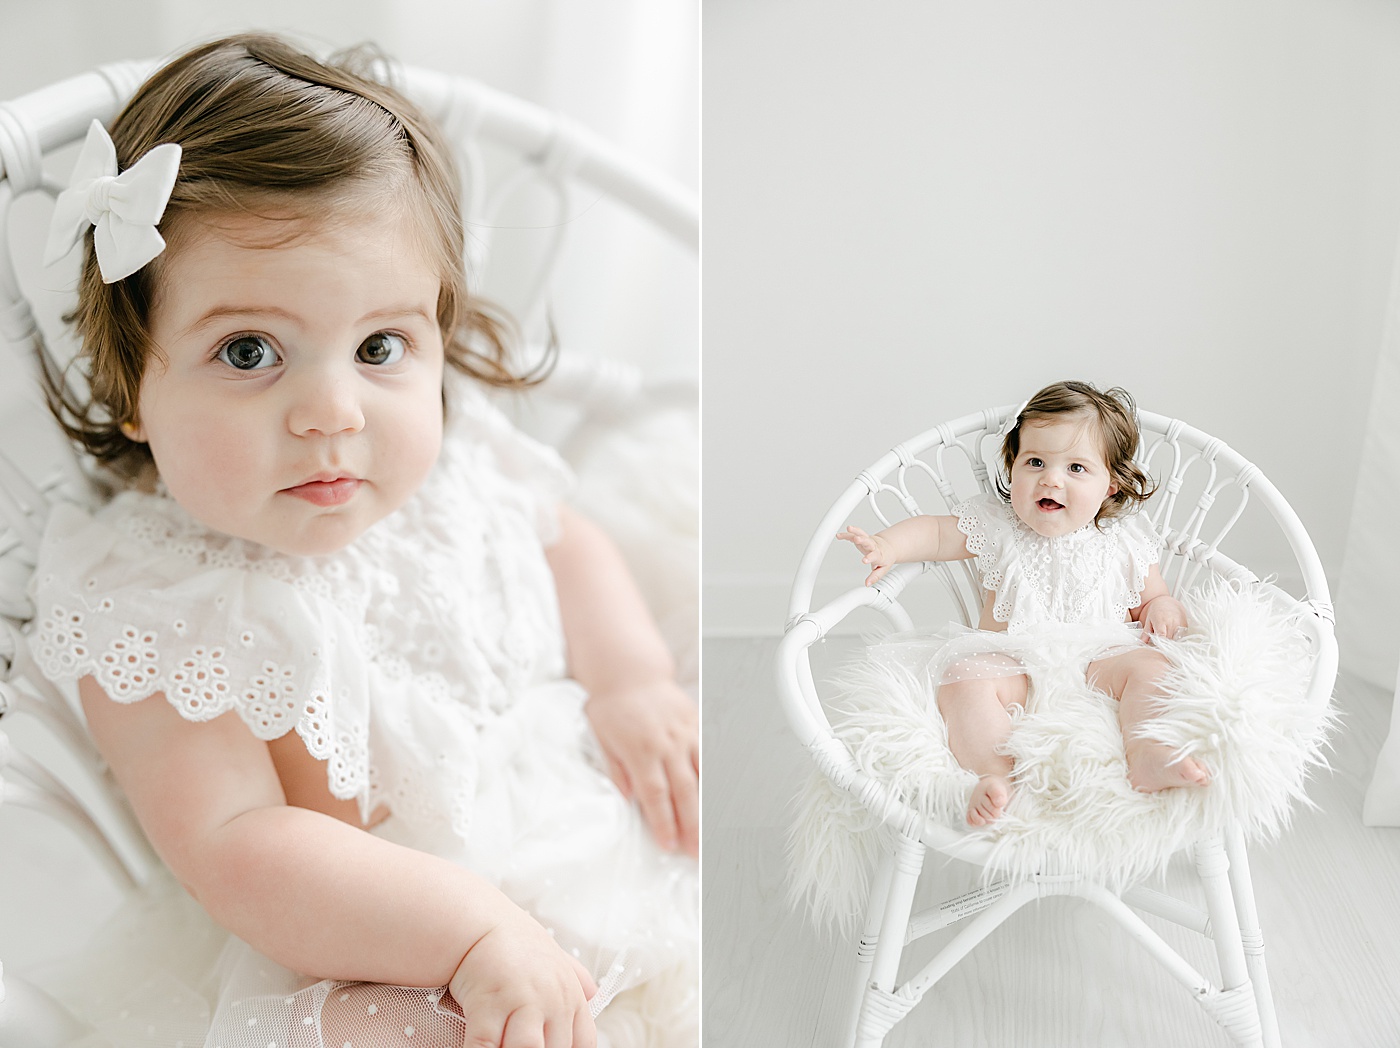 6 month milestone photoshoot for baby girl | Kristin Wood Photography